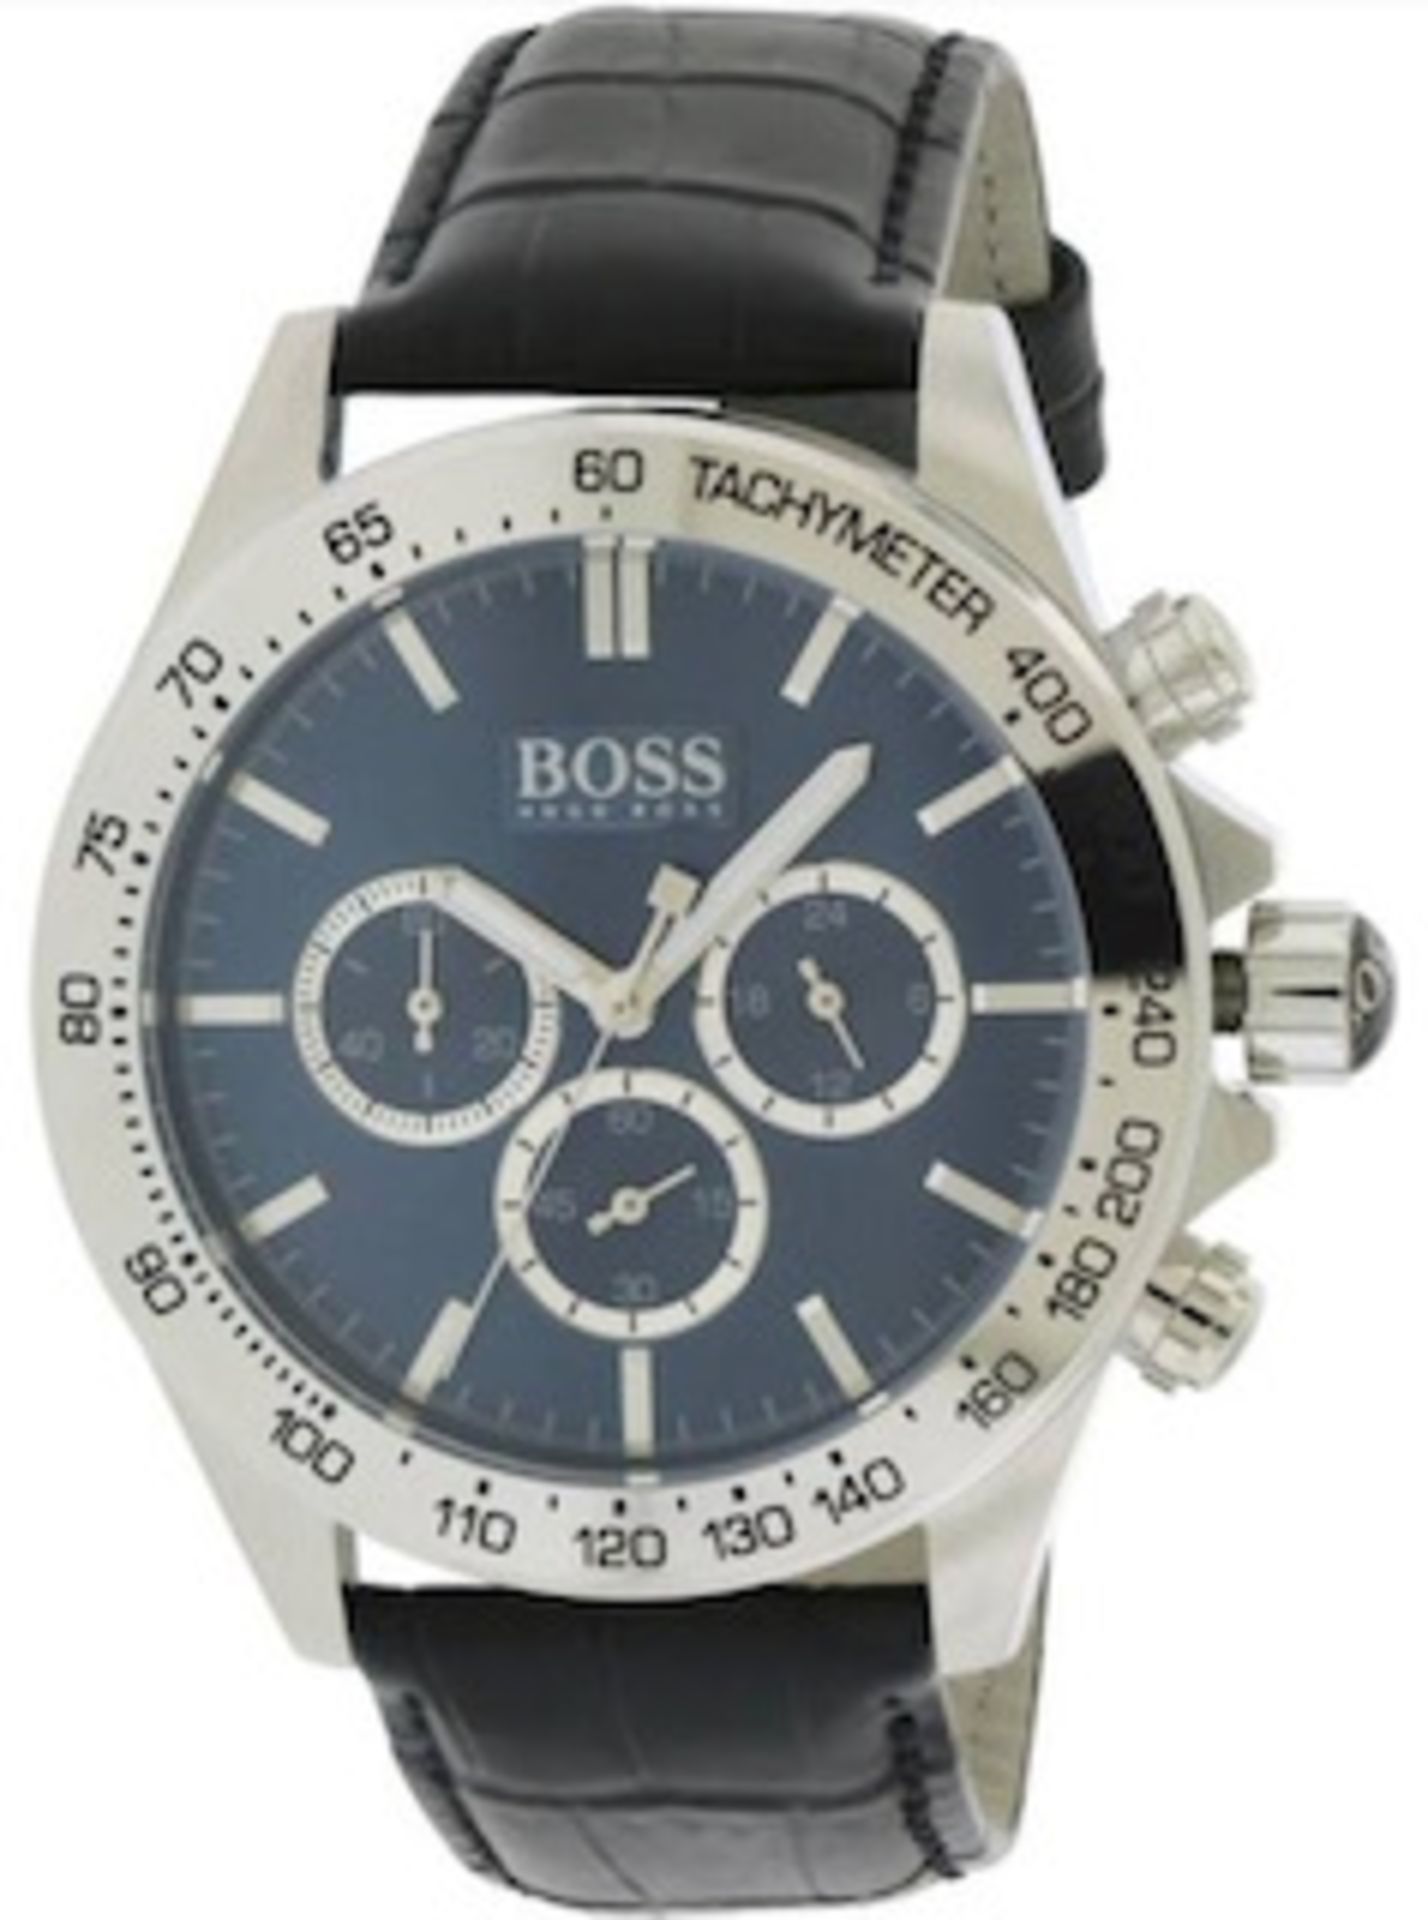 Hugo Boss 1513176 Men's Ikon Blue Dial Black Leather Strap Chronograph Watch - Image 2 of 6